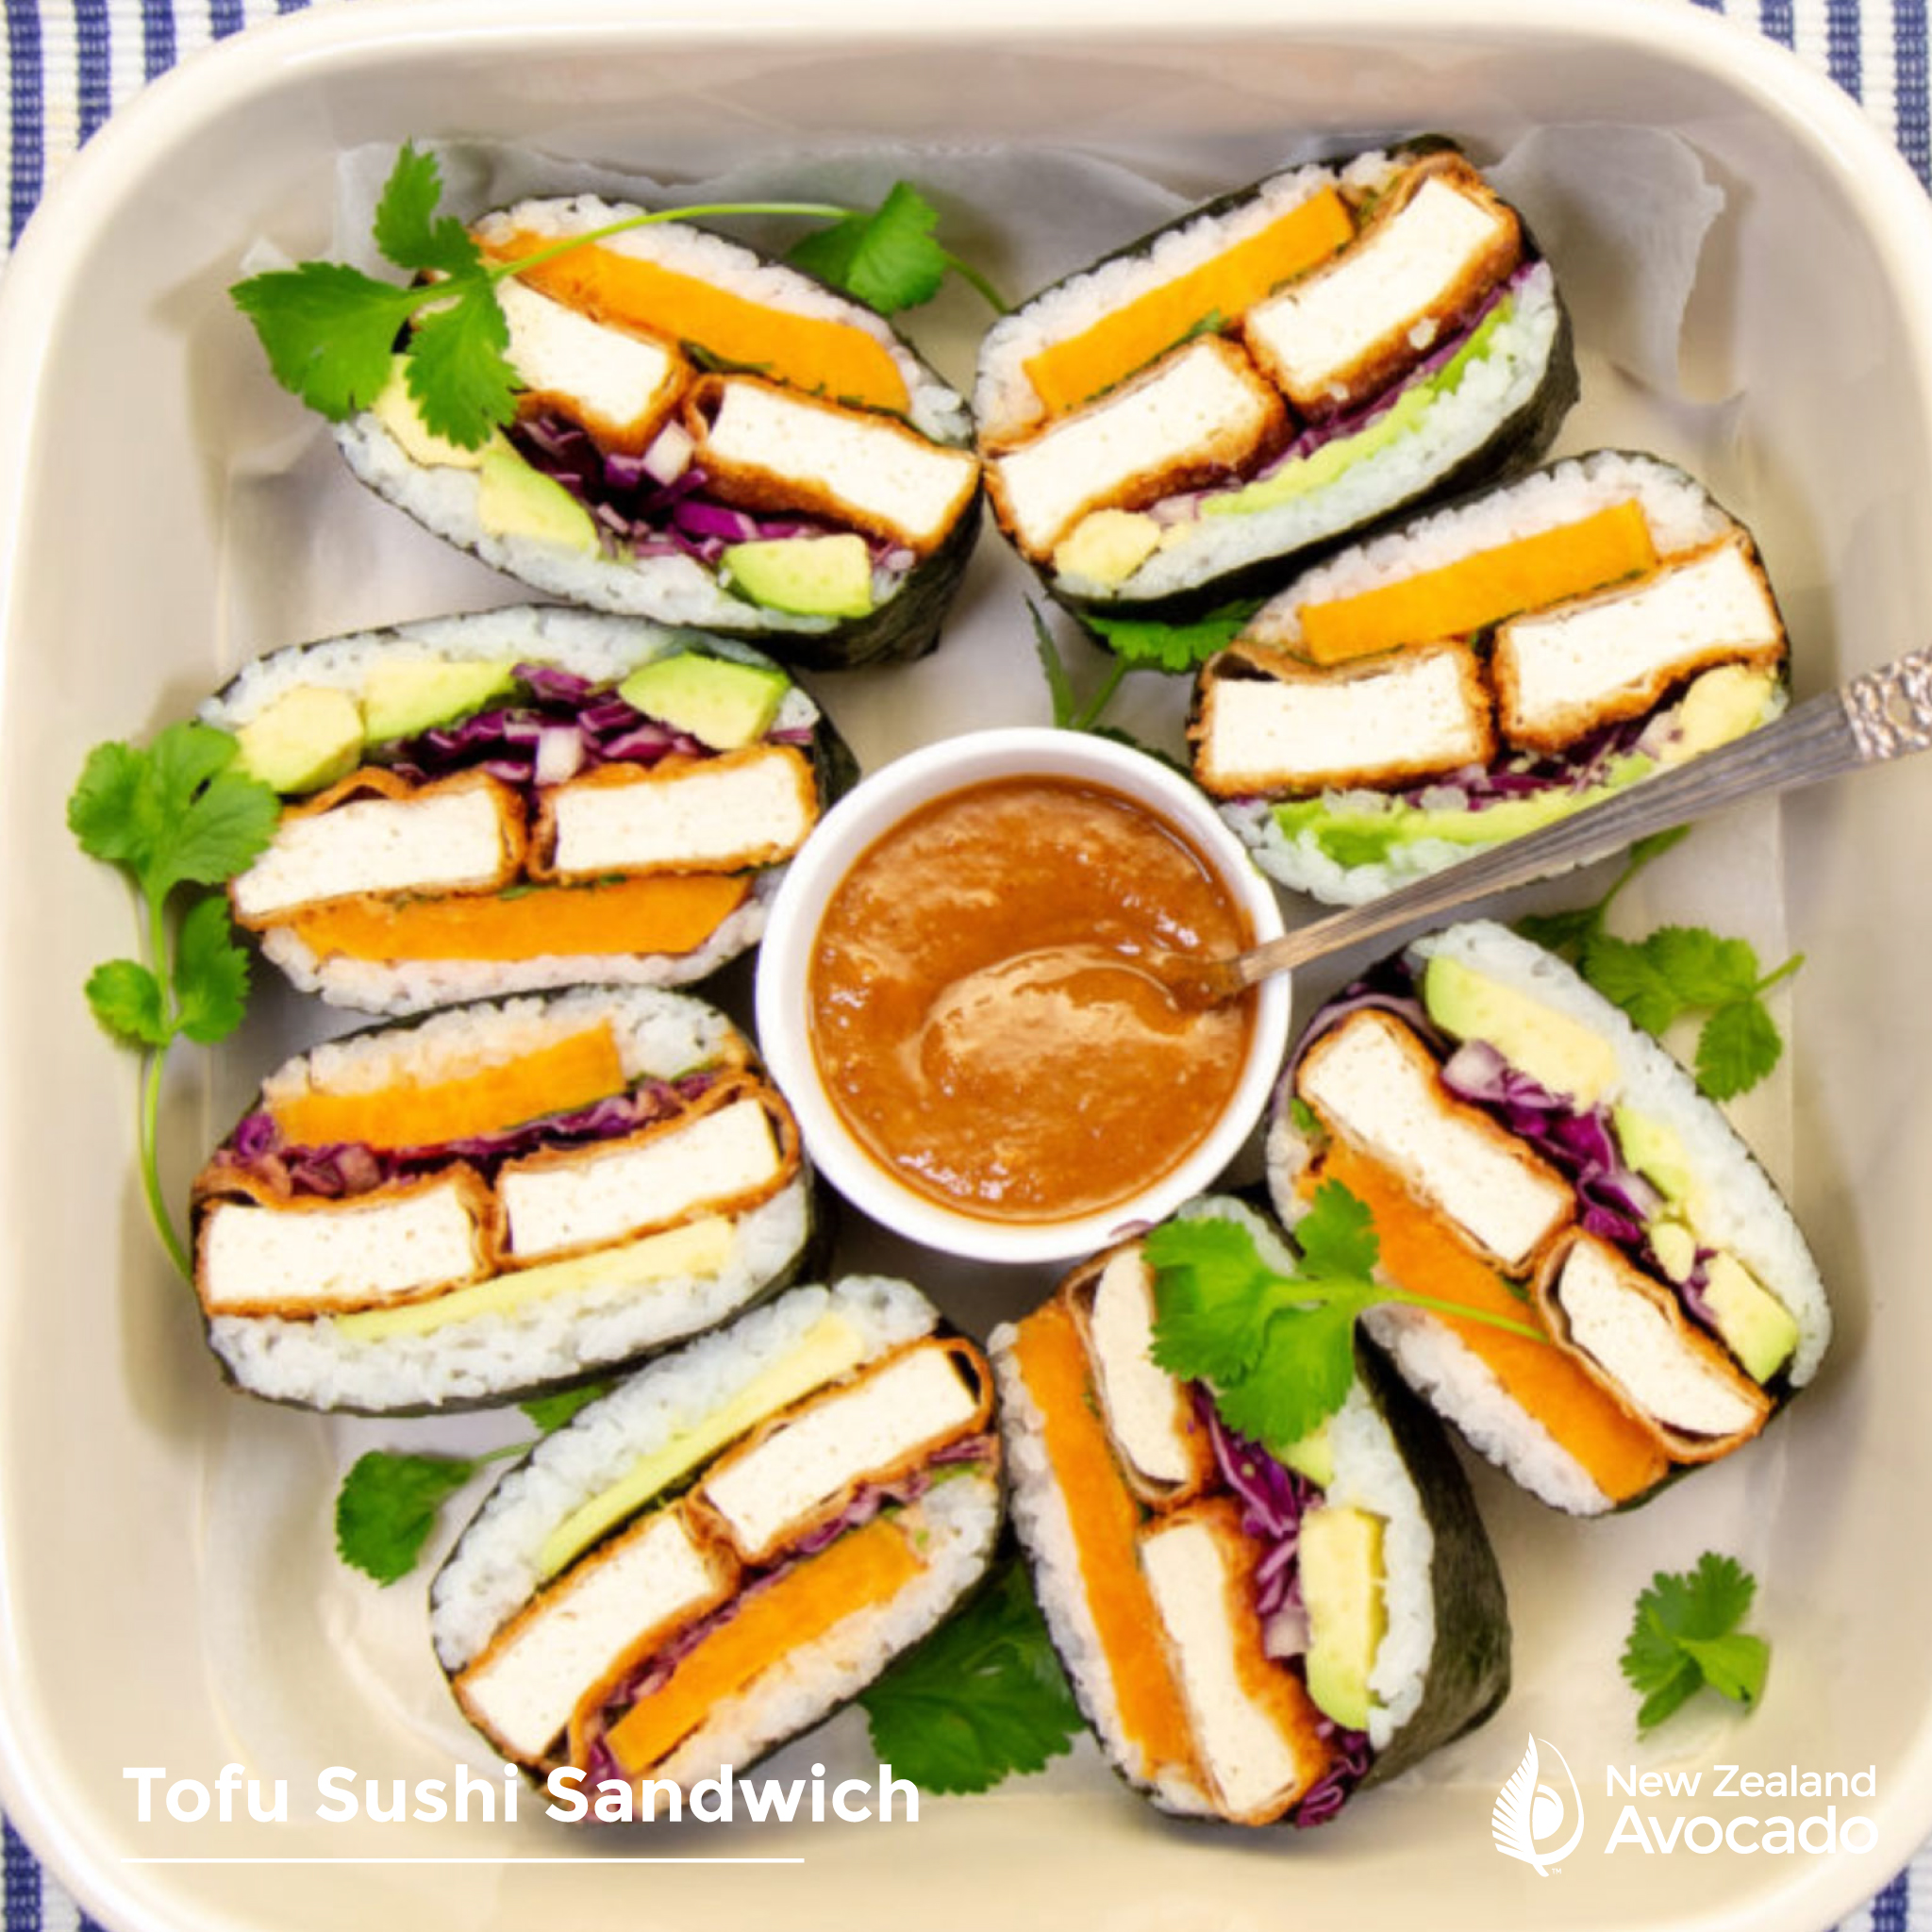 Avocado & Tofu Sushi Sandwich with Tahini Sauce